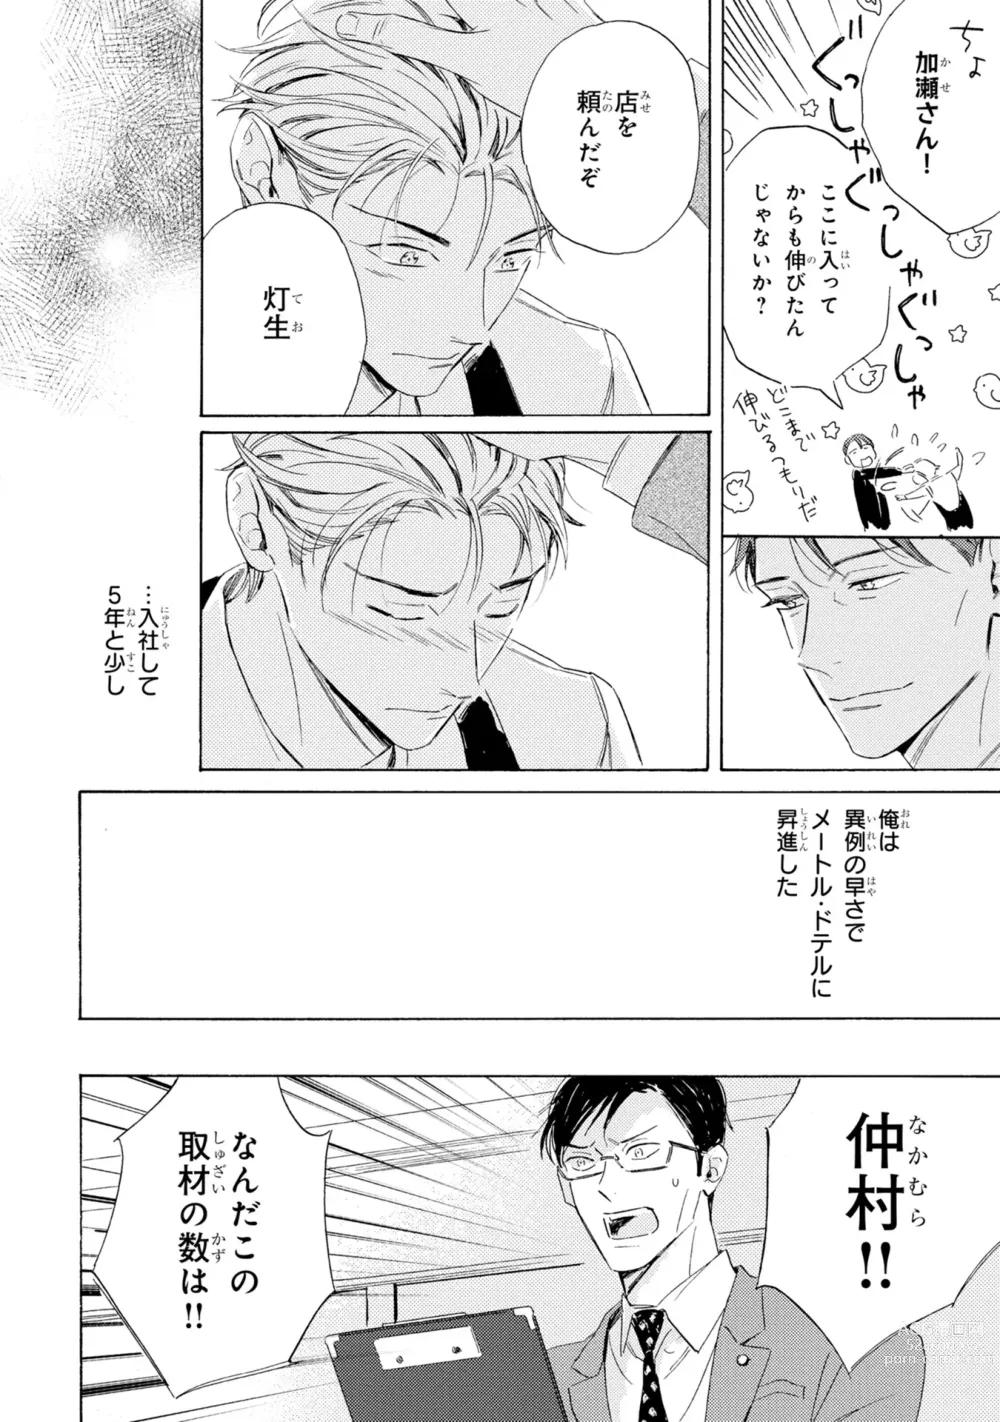 Page 14 of manga Ginmokusei no Shitateya